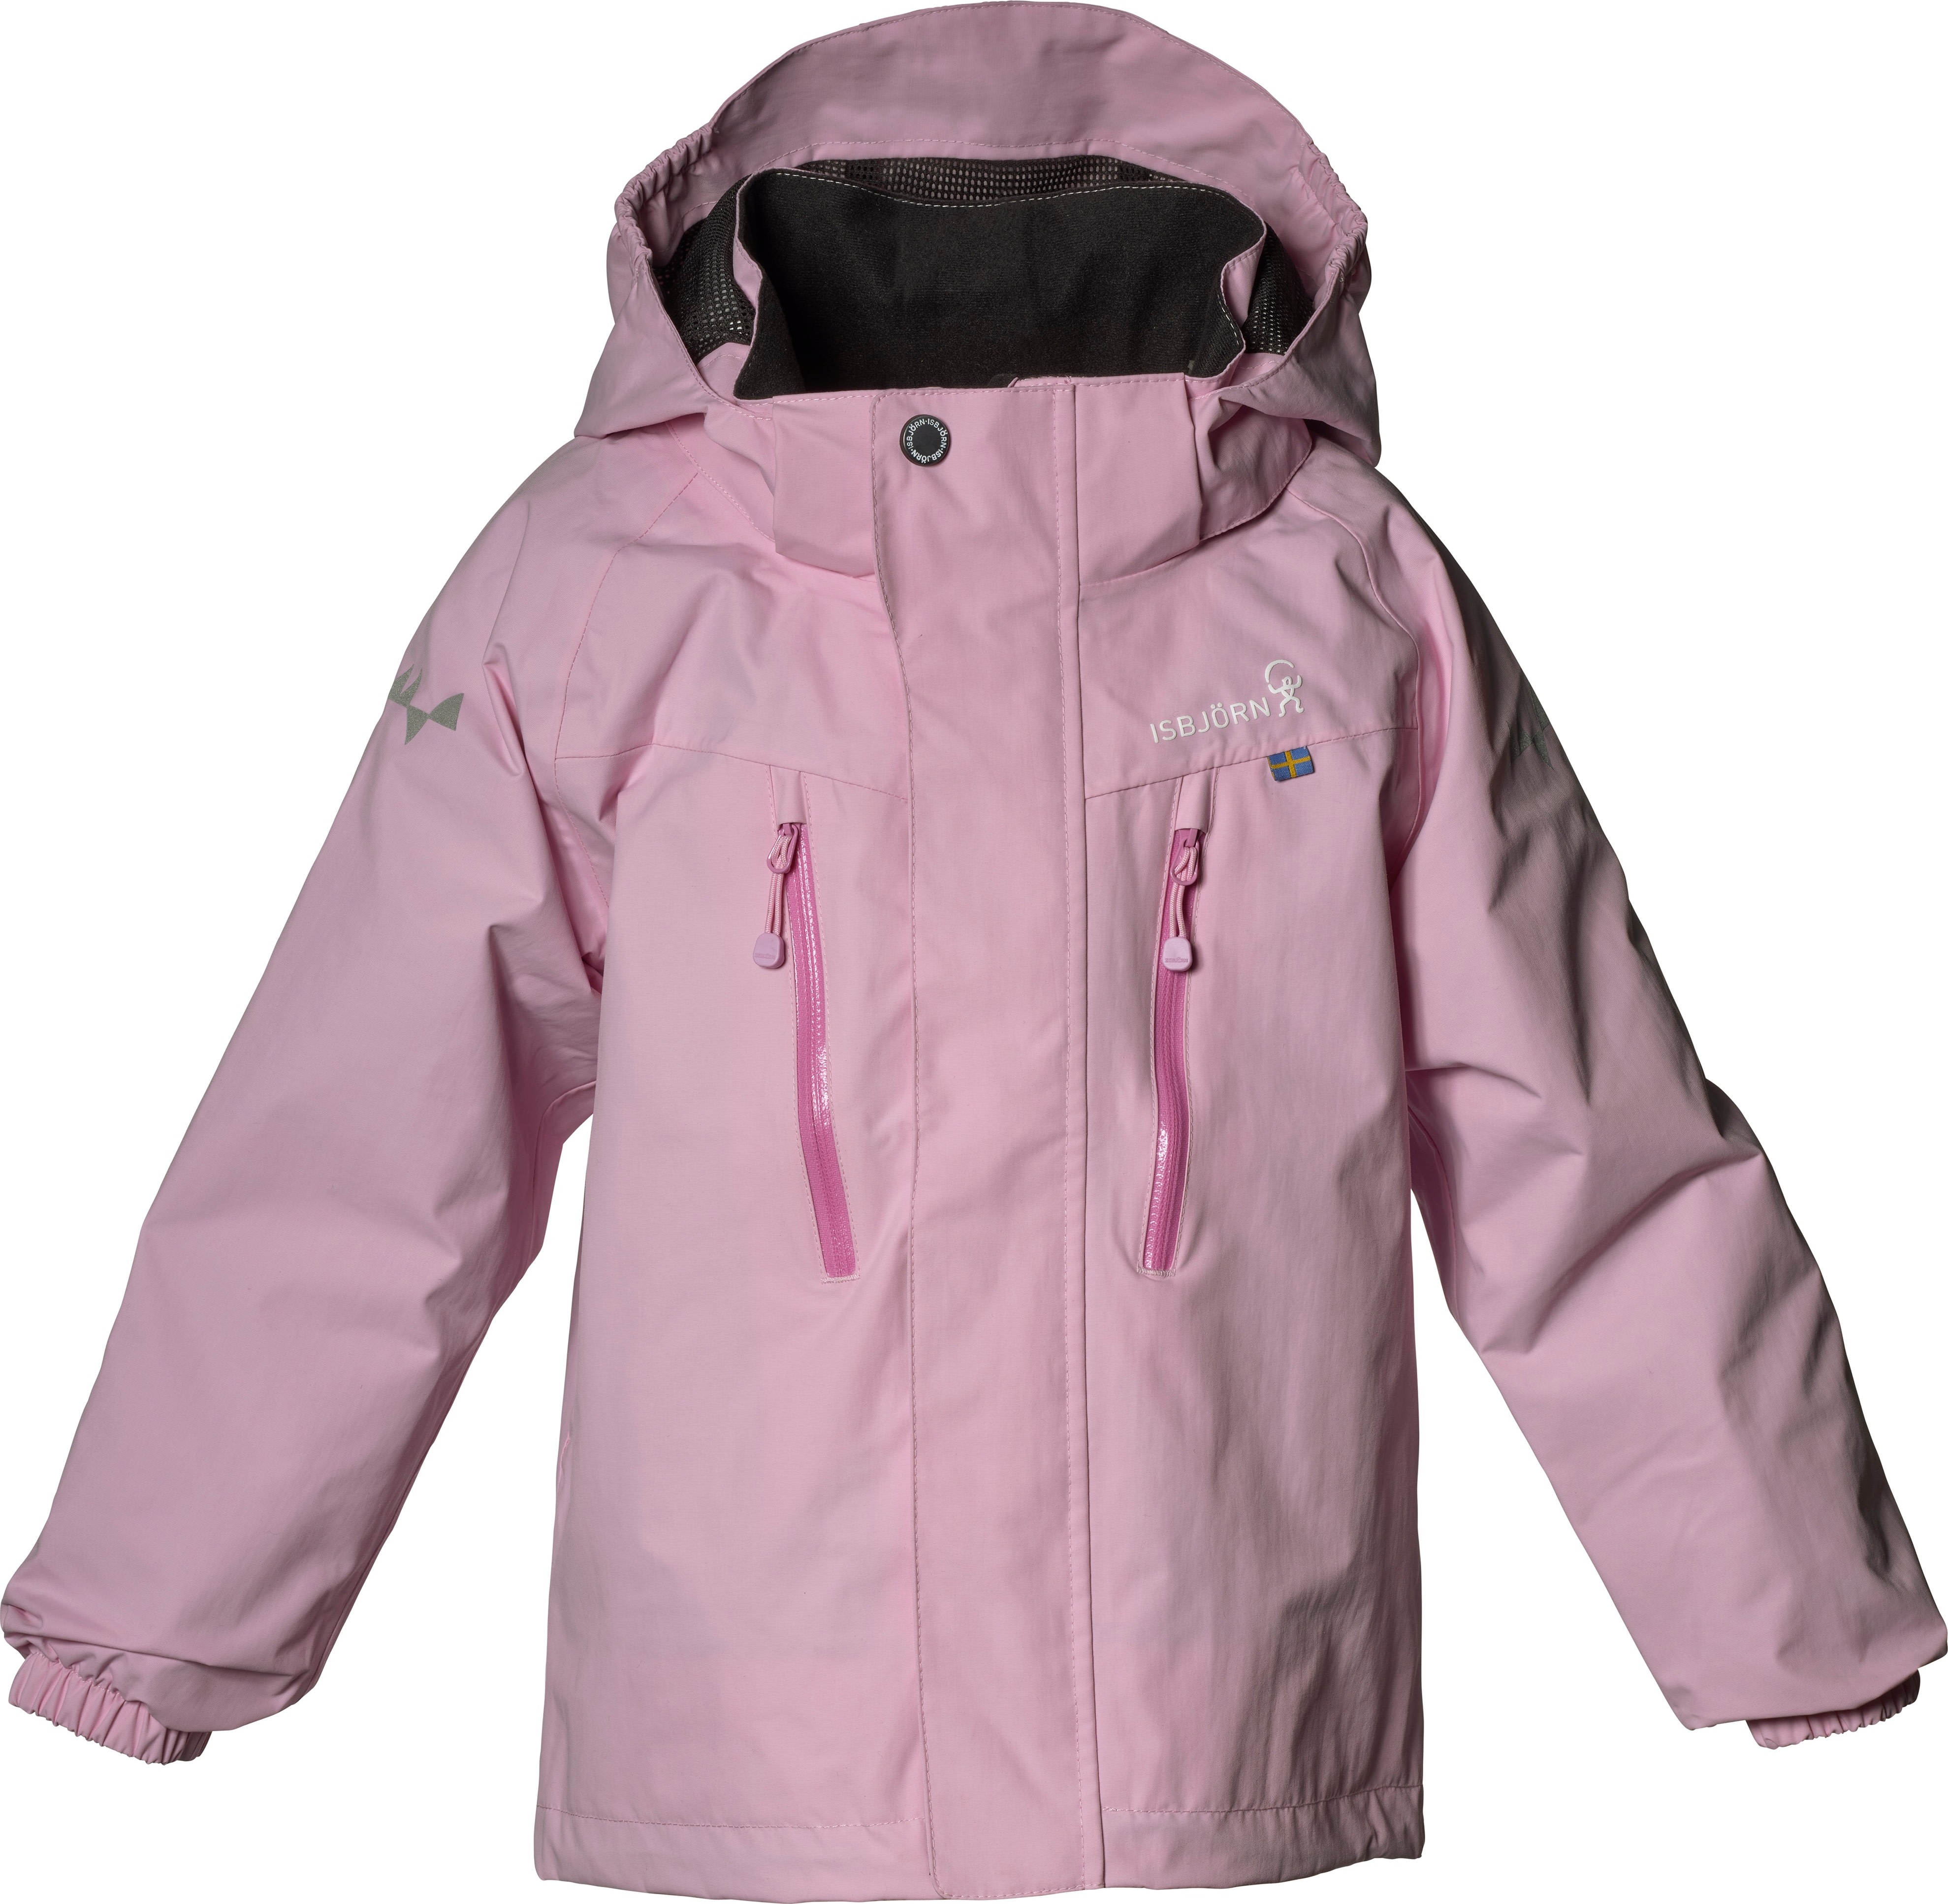 Kids’ Storm Hard Shell Jacket Frost Pink